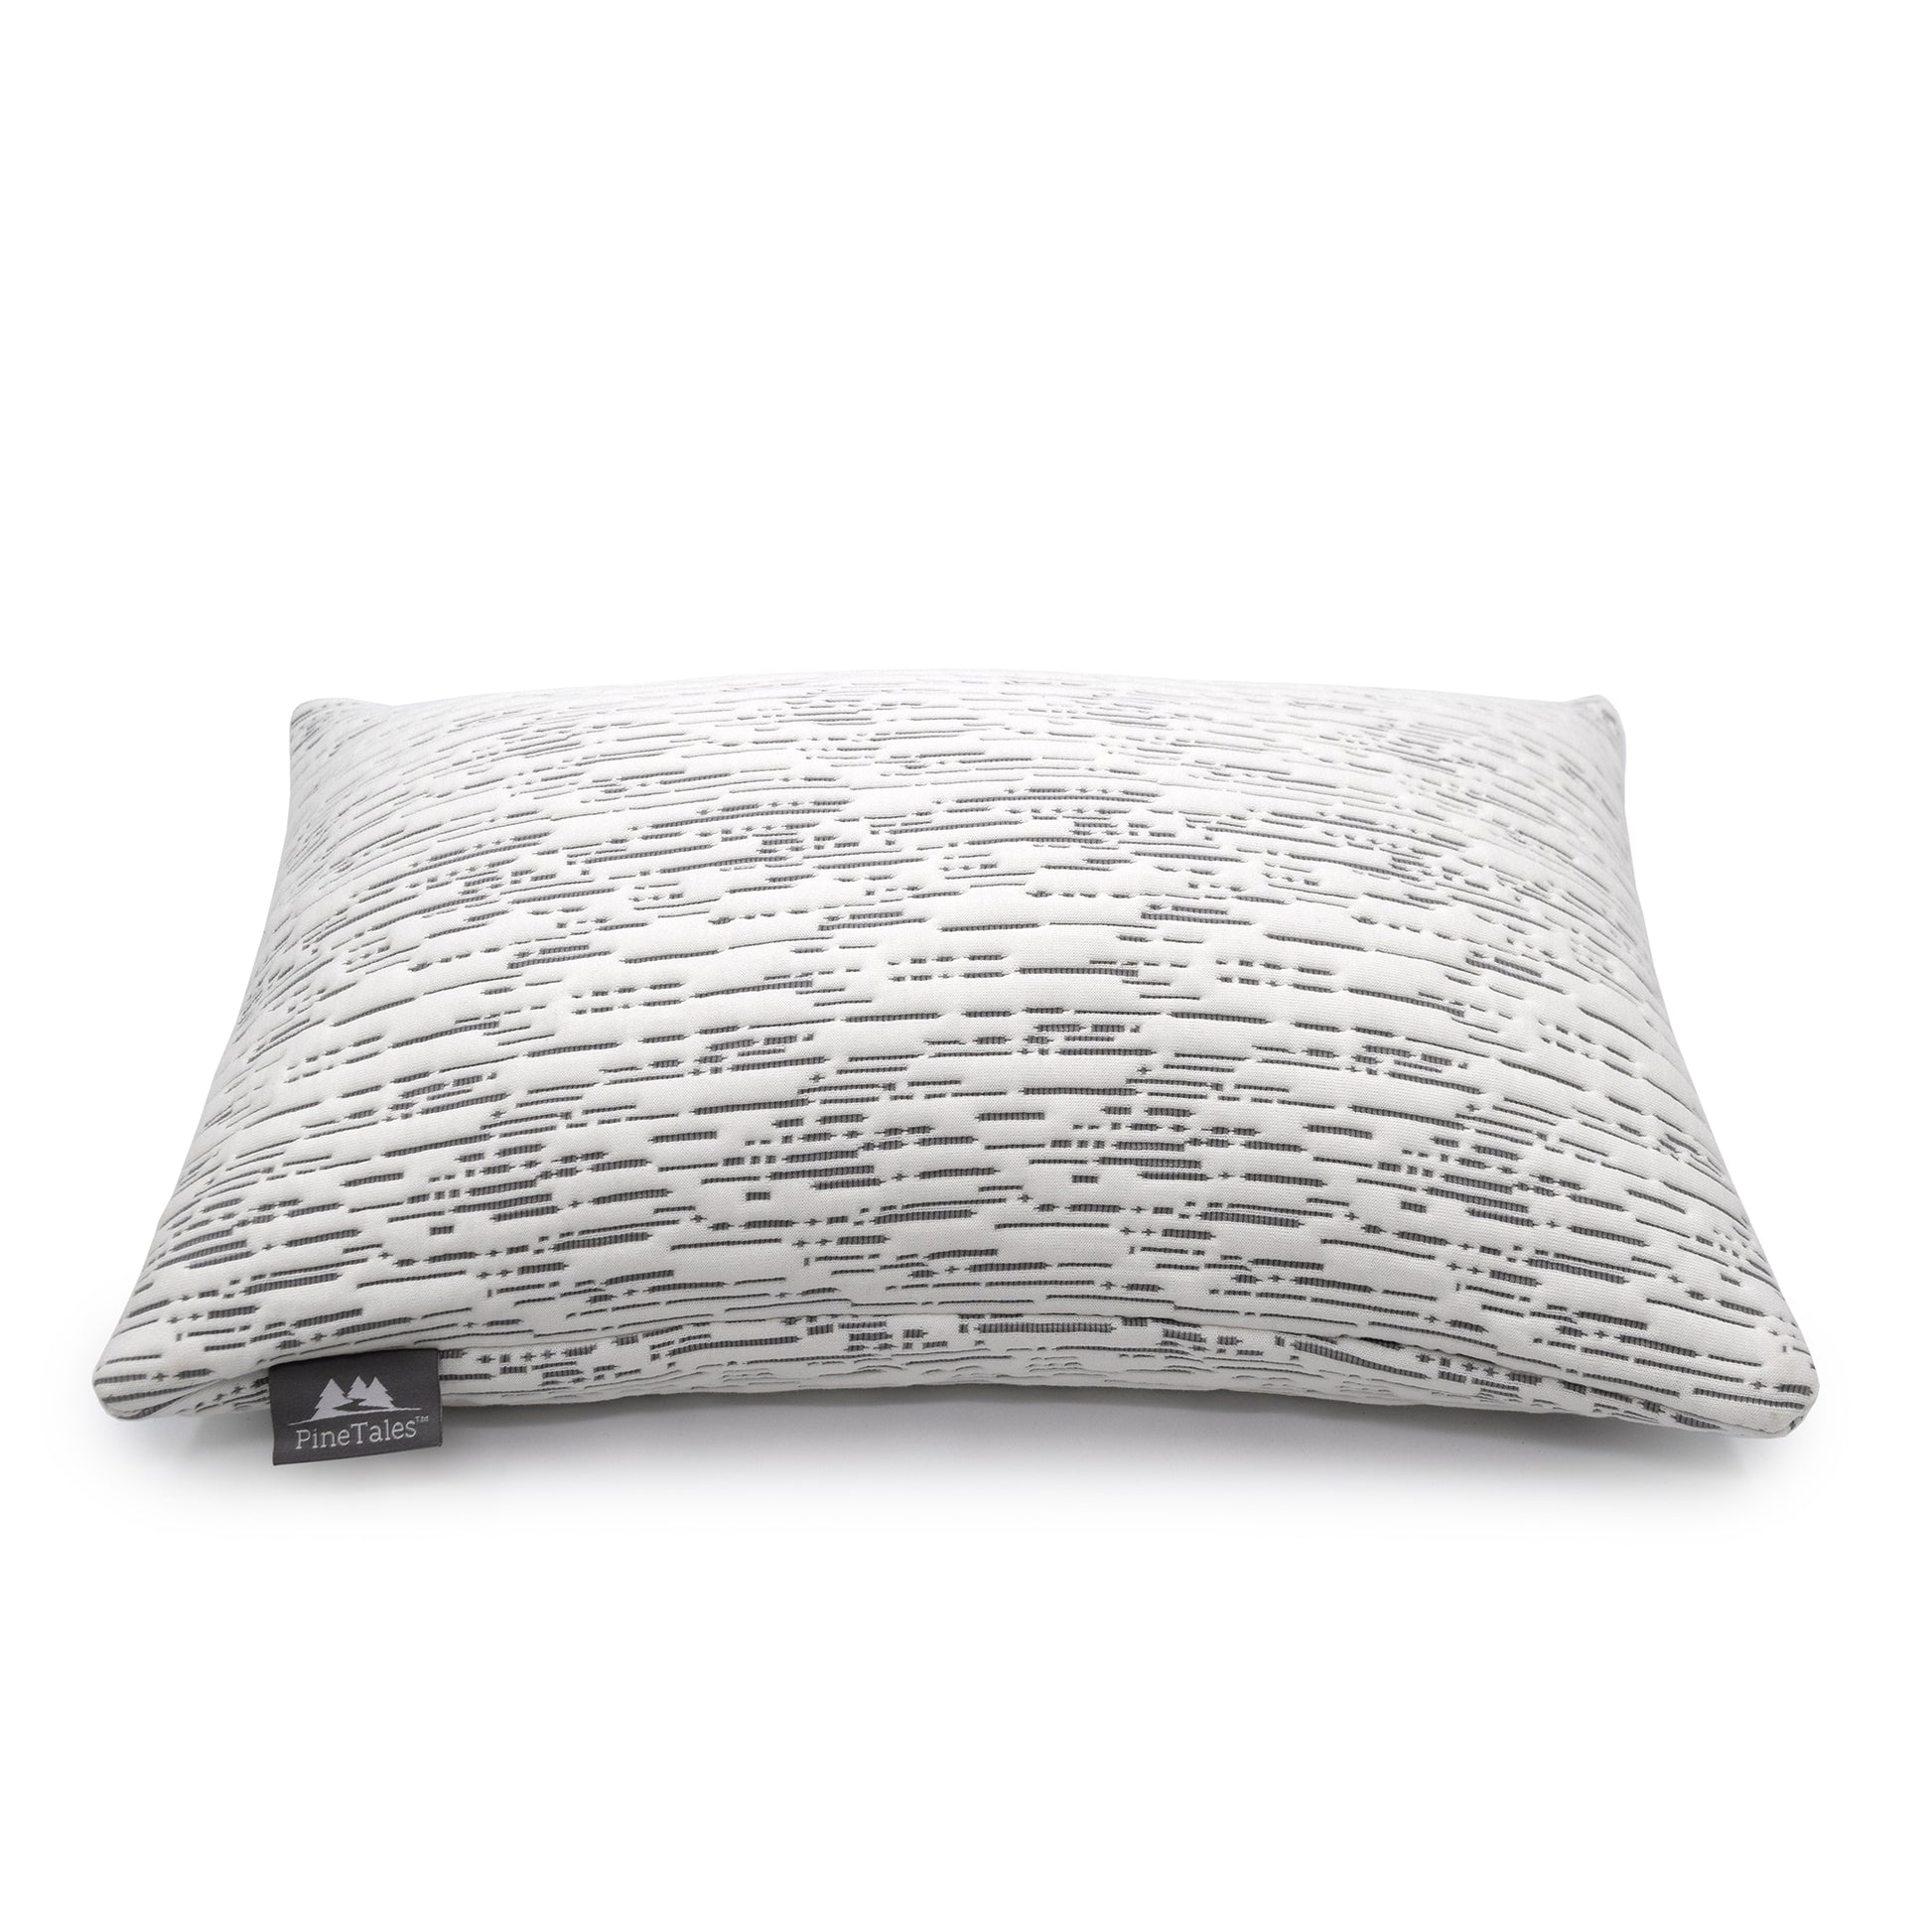 Hemp Pillow - PineTales - Matrix Design